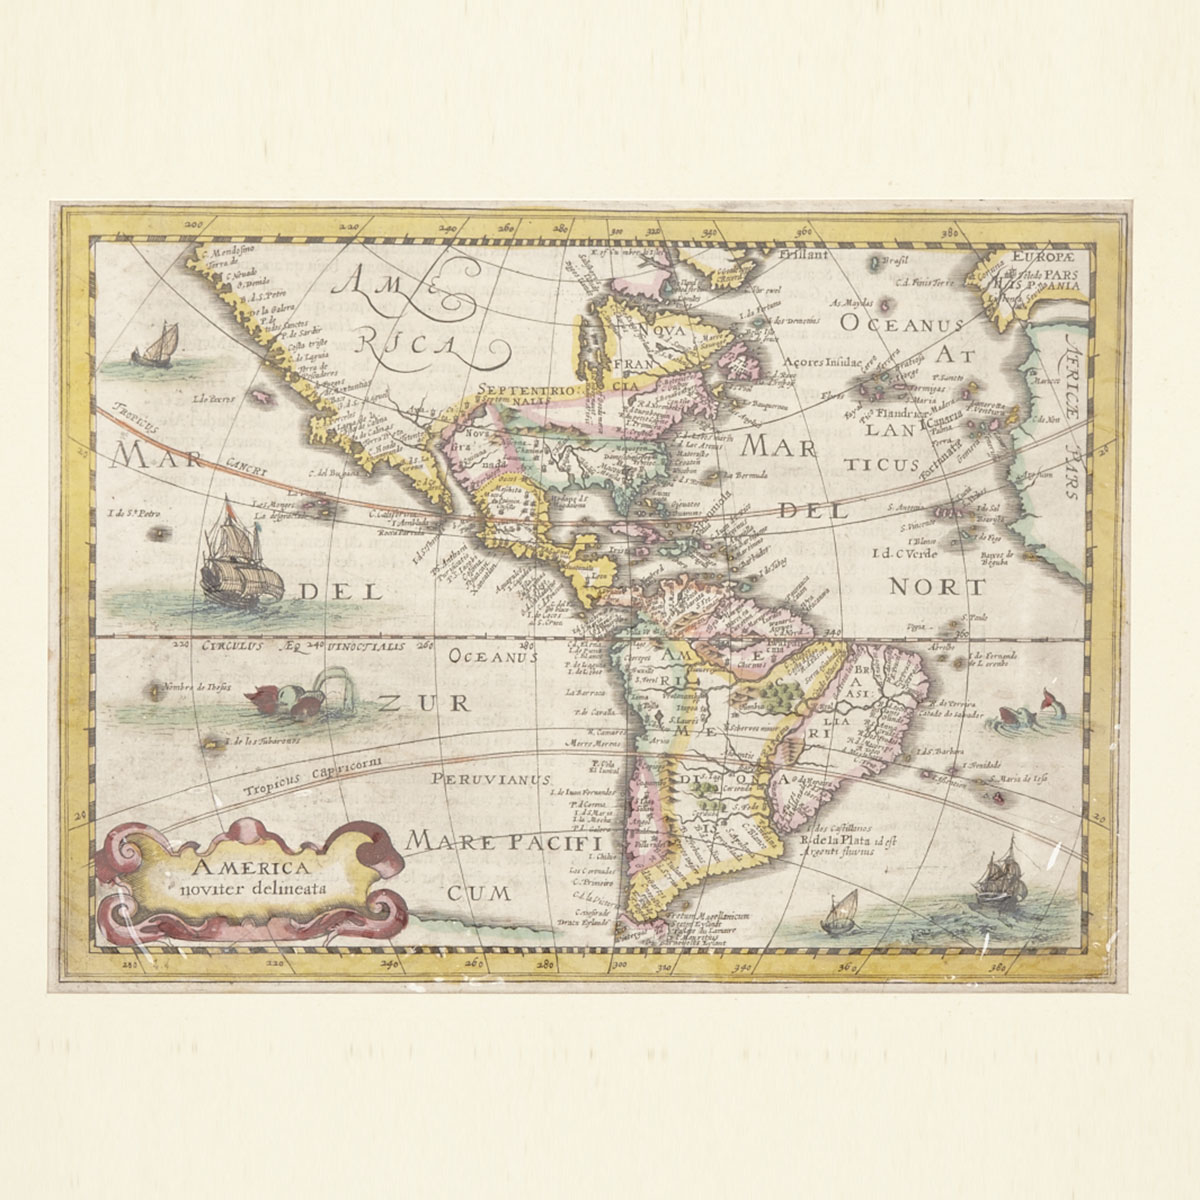 JOHANNES CLOPPENBURG, L’AMERIQUE: AMERICA NOVITER DELINEATA, AMSTERDAM, 1630